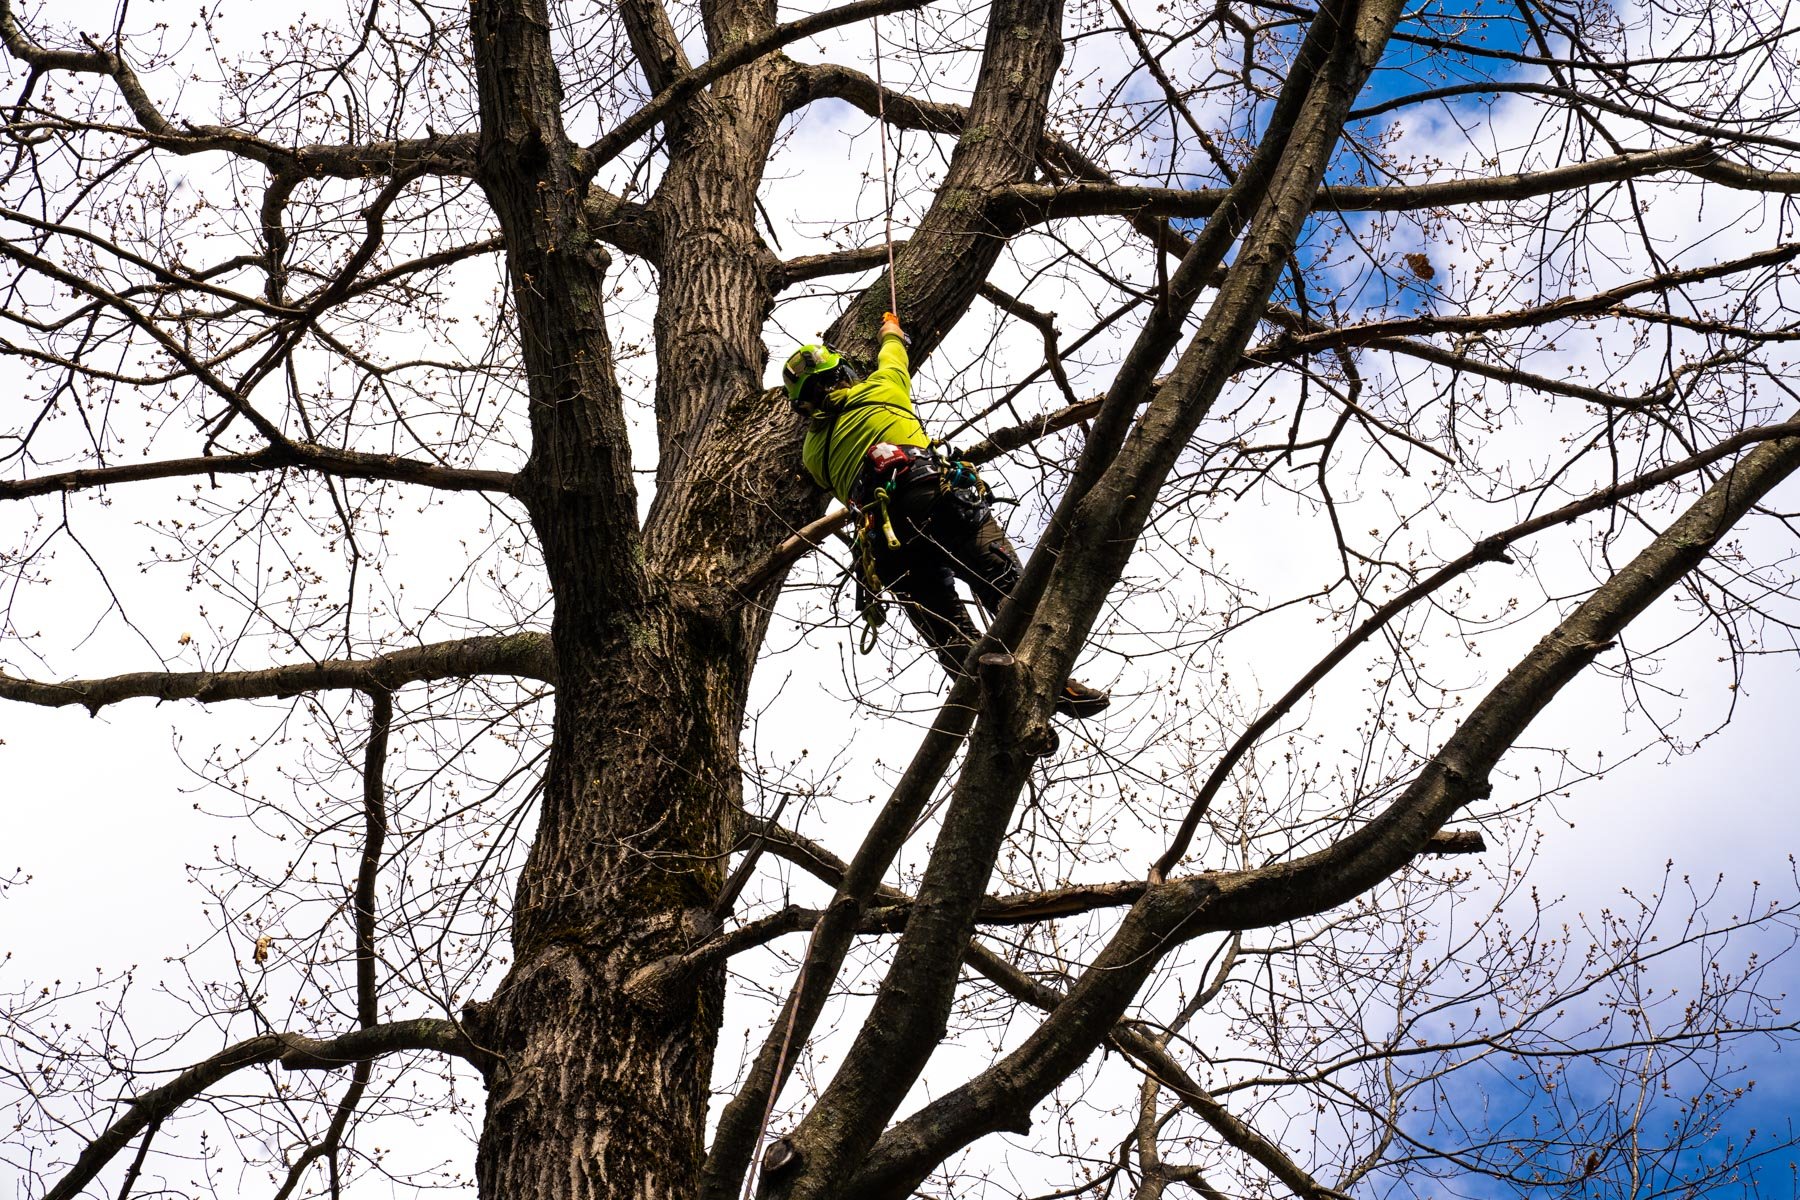 tree service crew climbing tree